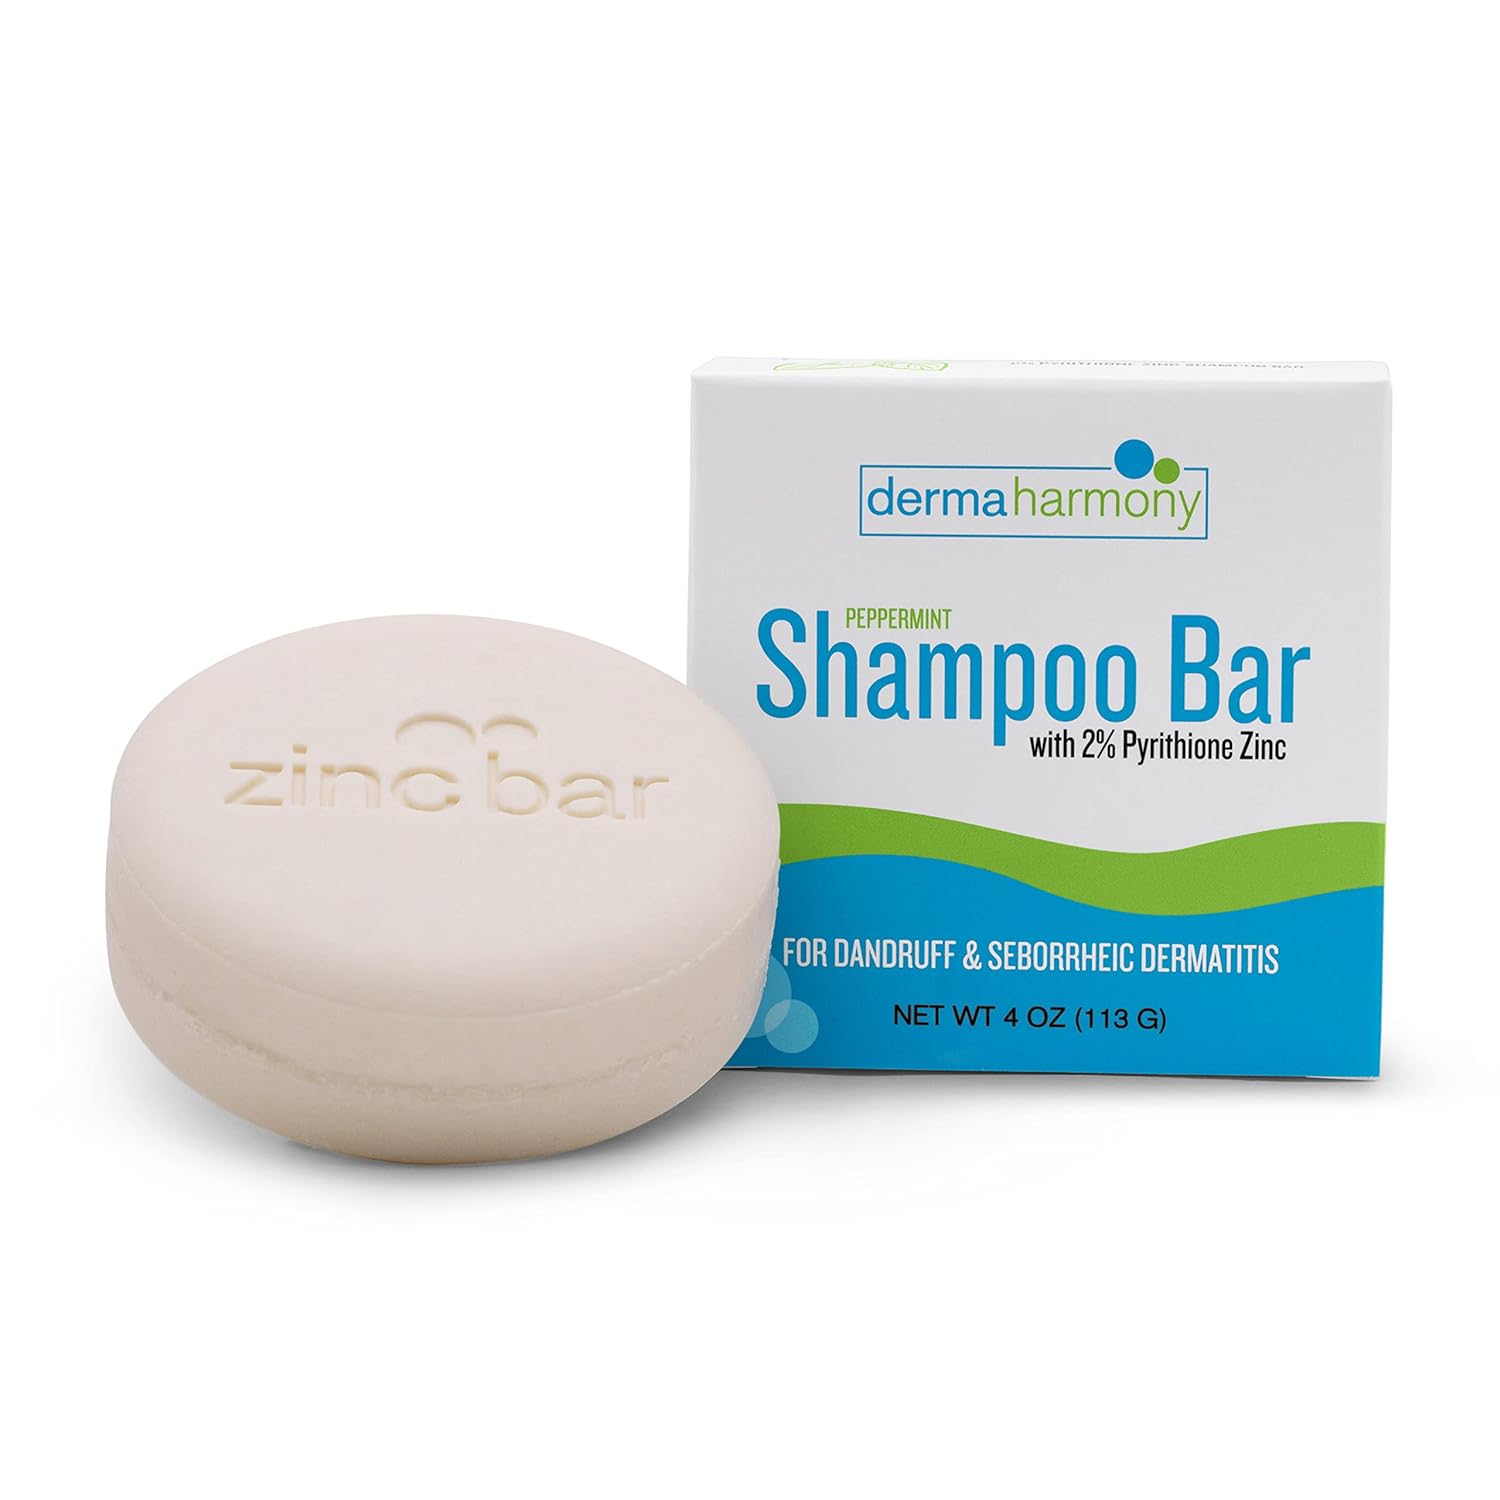 DermaHarmony 2% Pyrithione Zinc Shampoo …